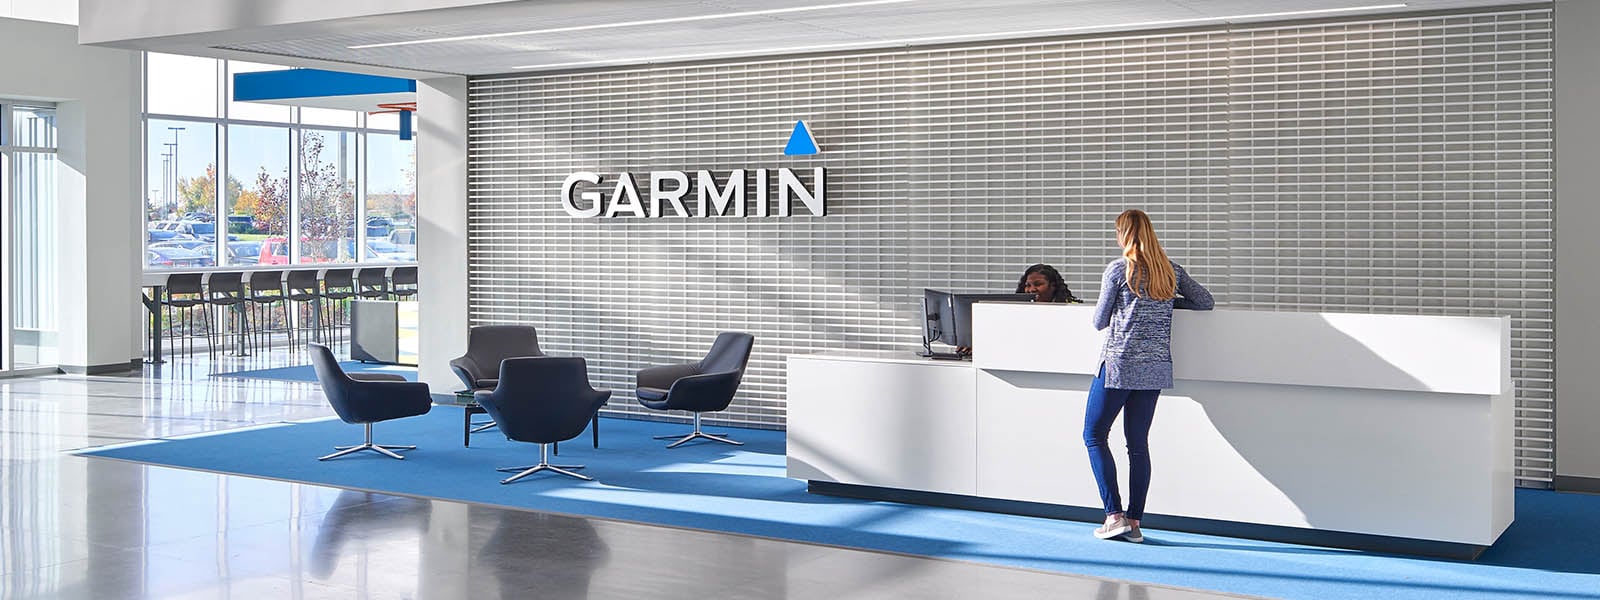 About Garmin Connected Cabin Ecosystem | Garmin | India